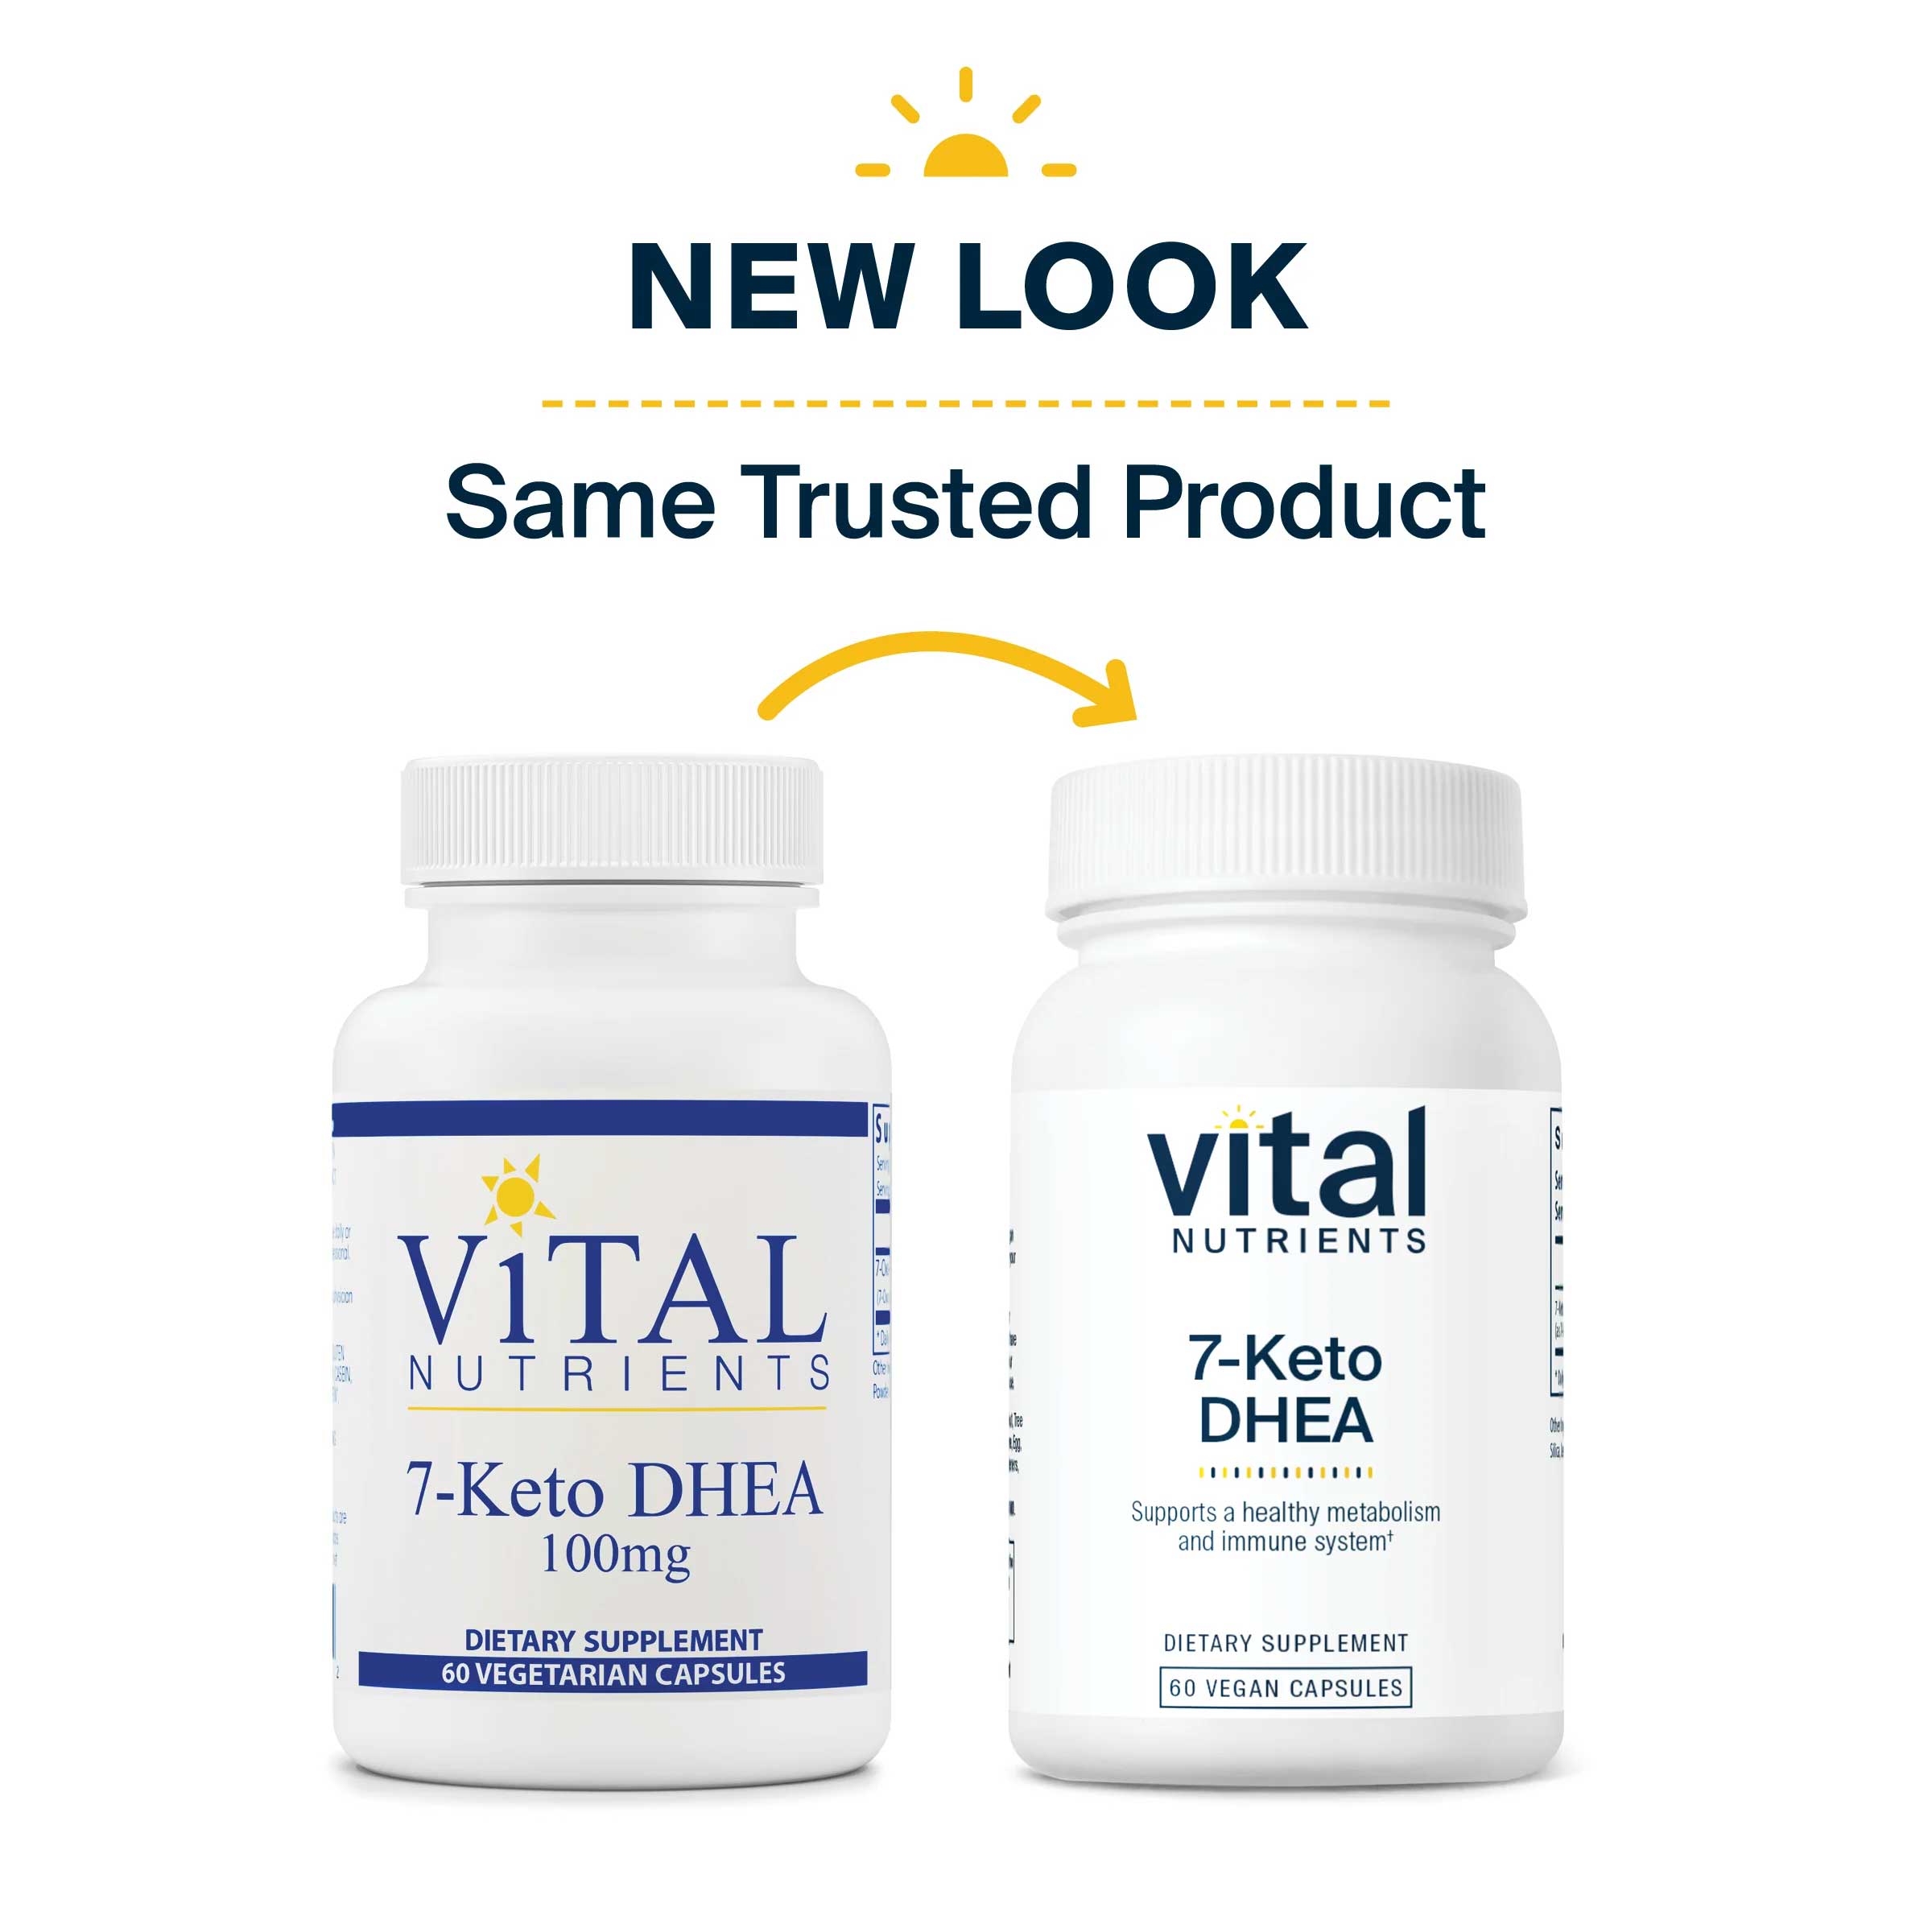 Vital Nutrients 7-Keto DHEA 100mg New Look